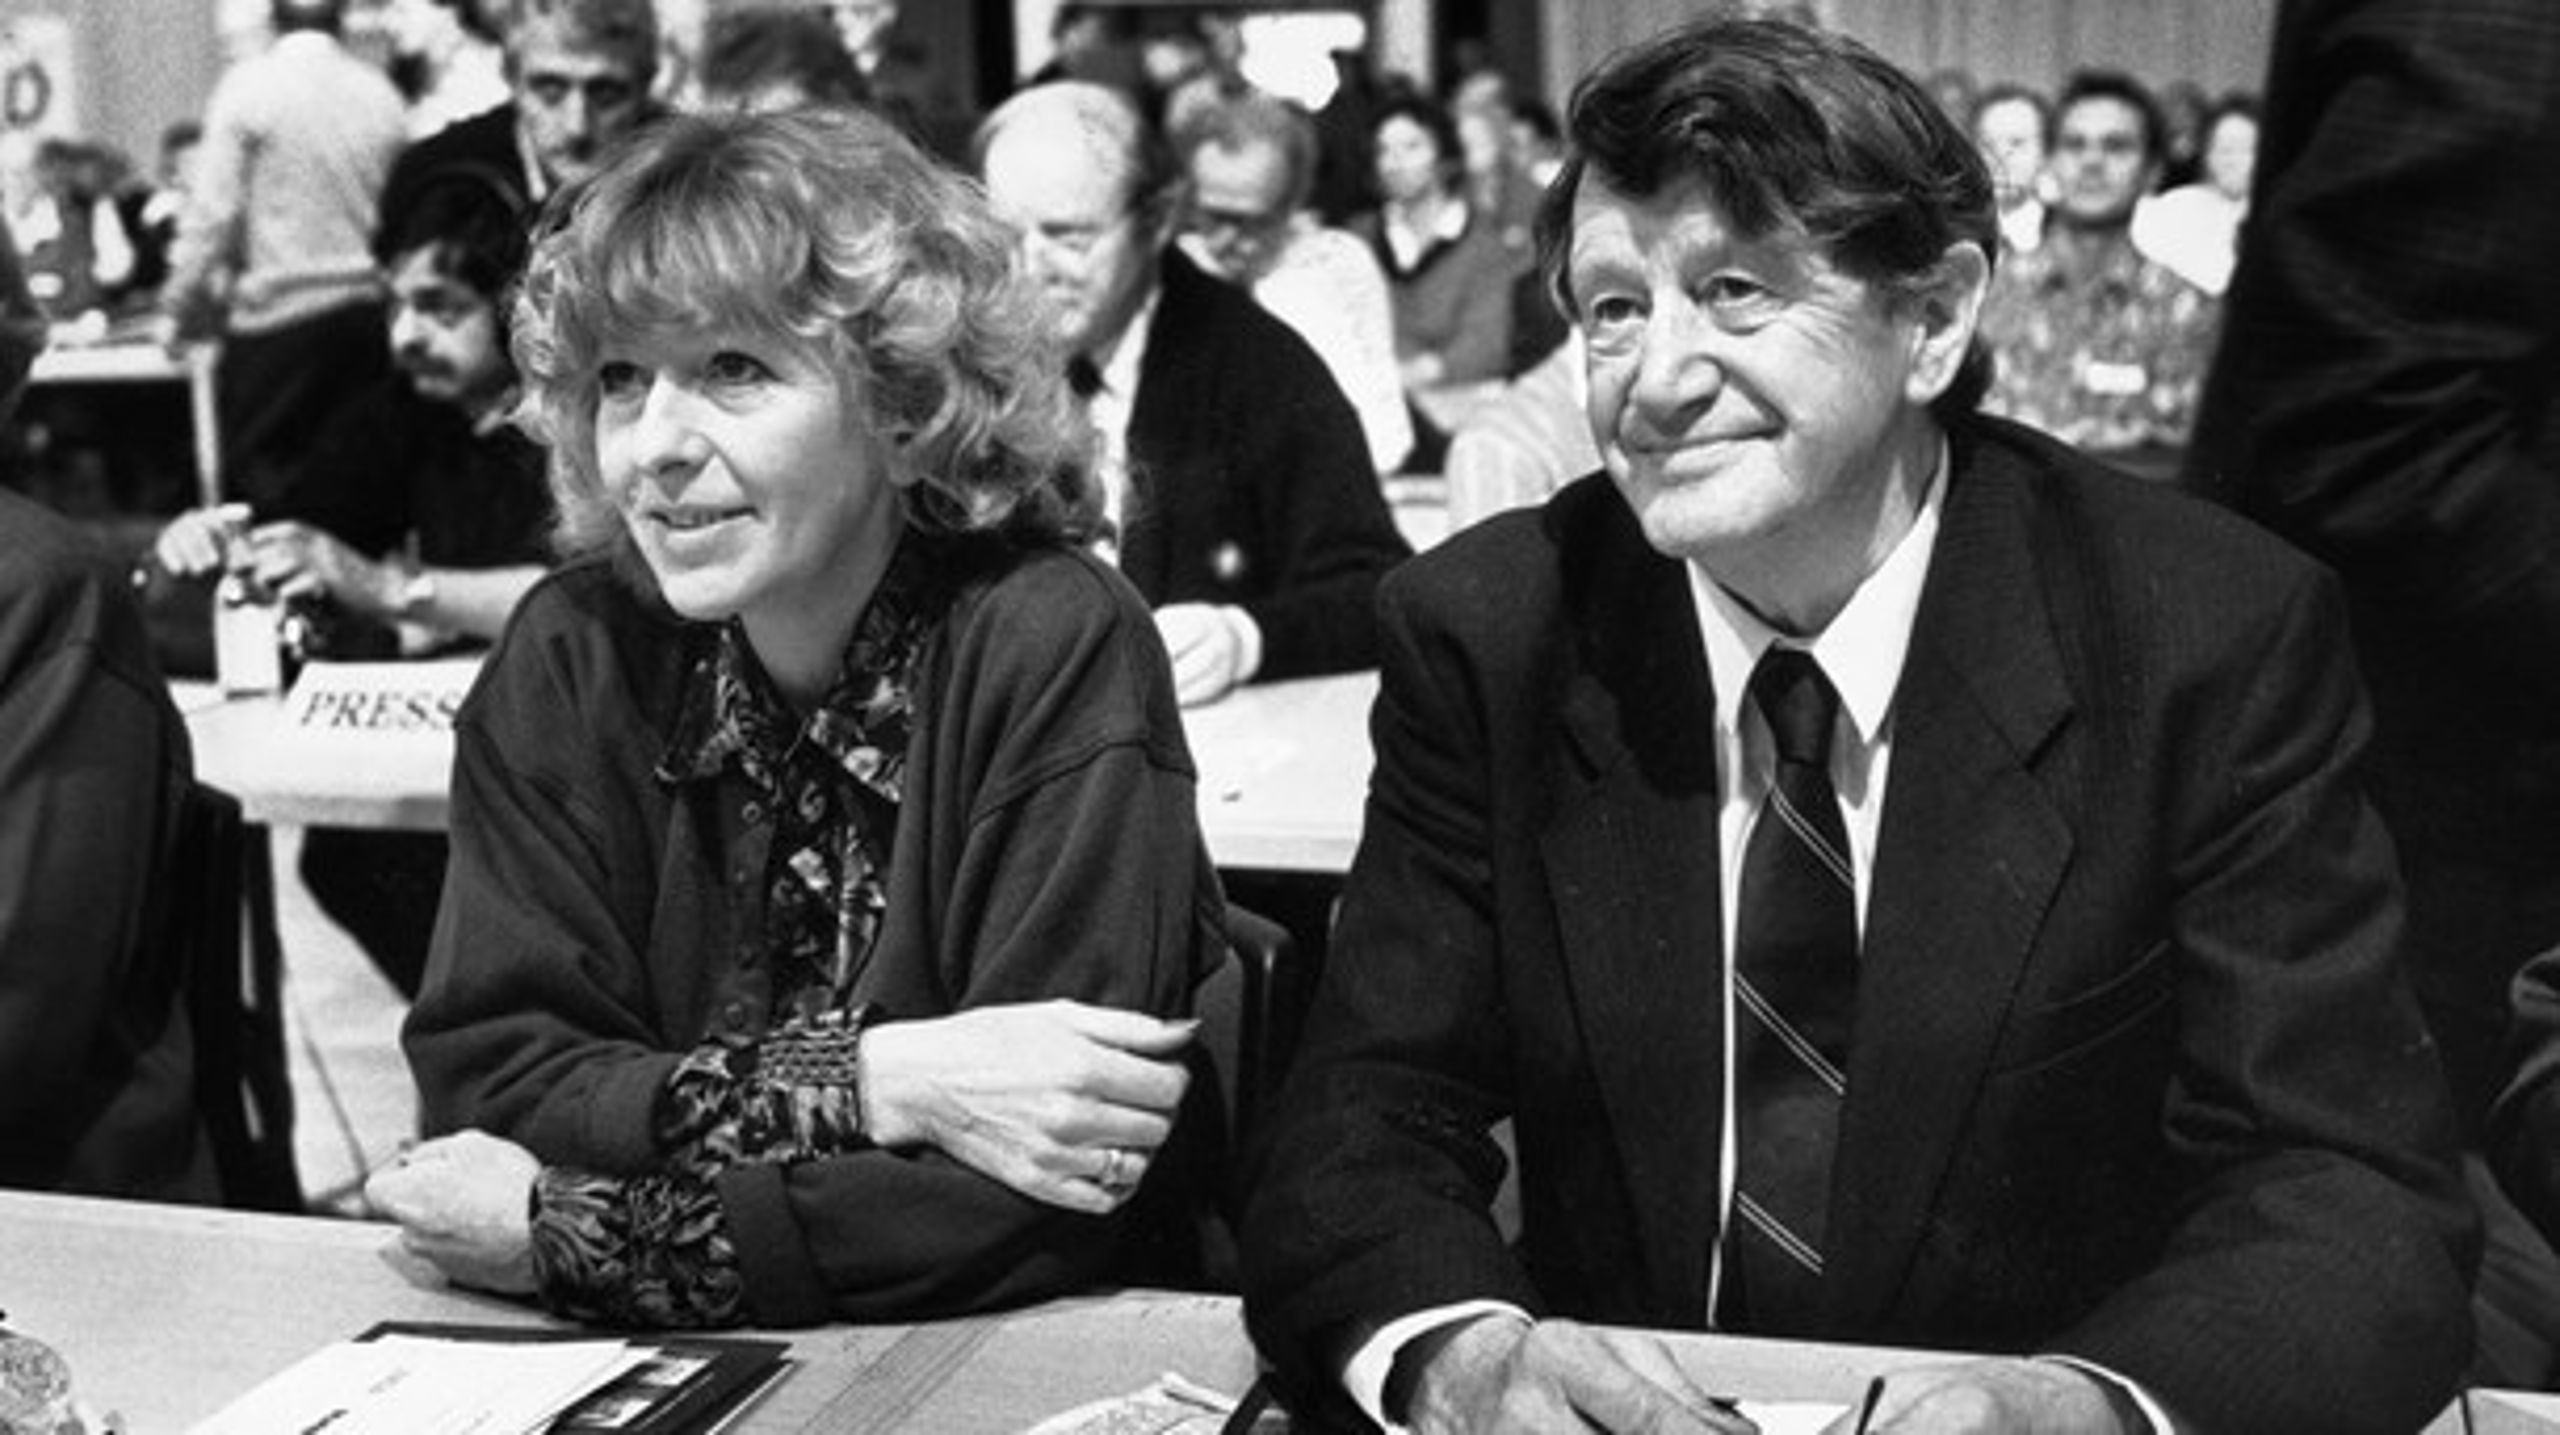 CD's landsmøde, 1989: Mimi Jakobsen overtager formandsposten efter sin far, Erhard Jakobsen.